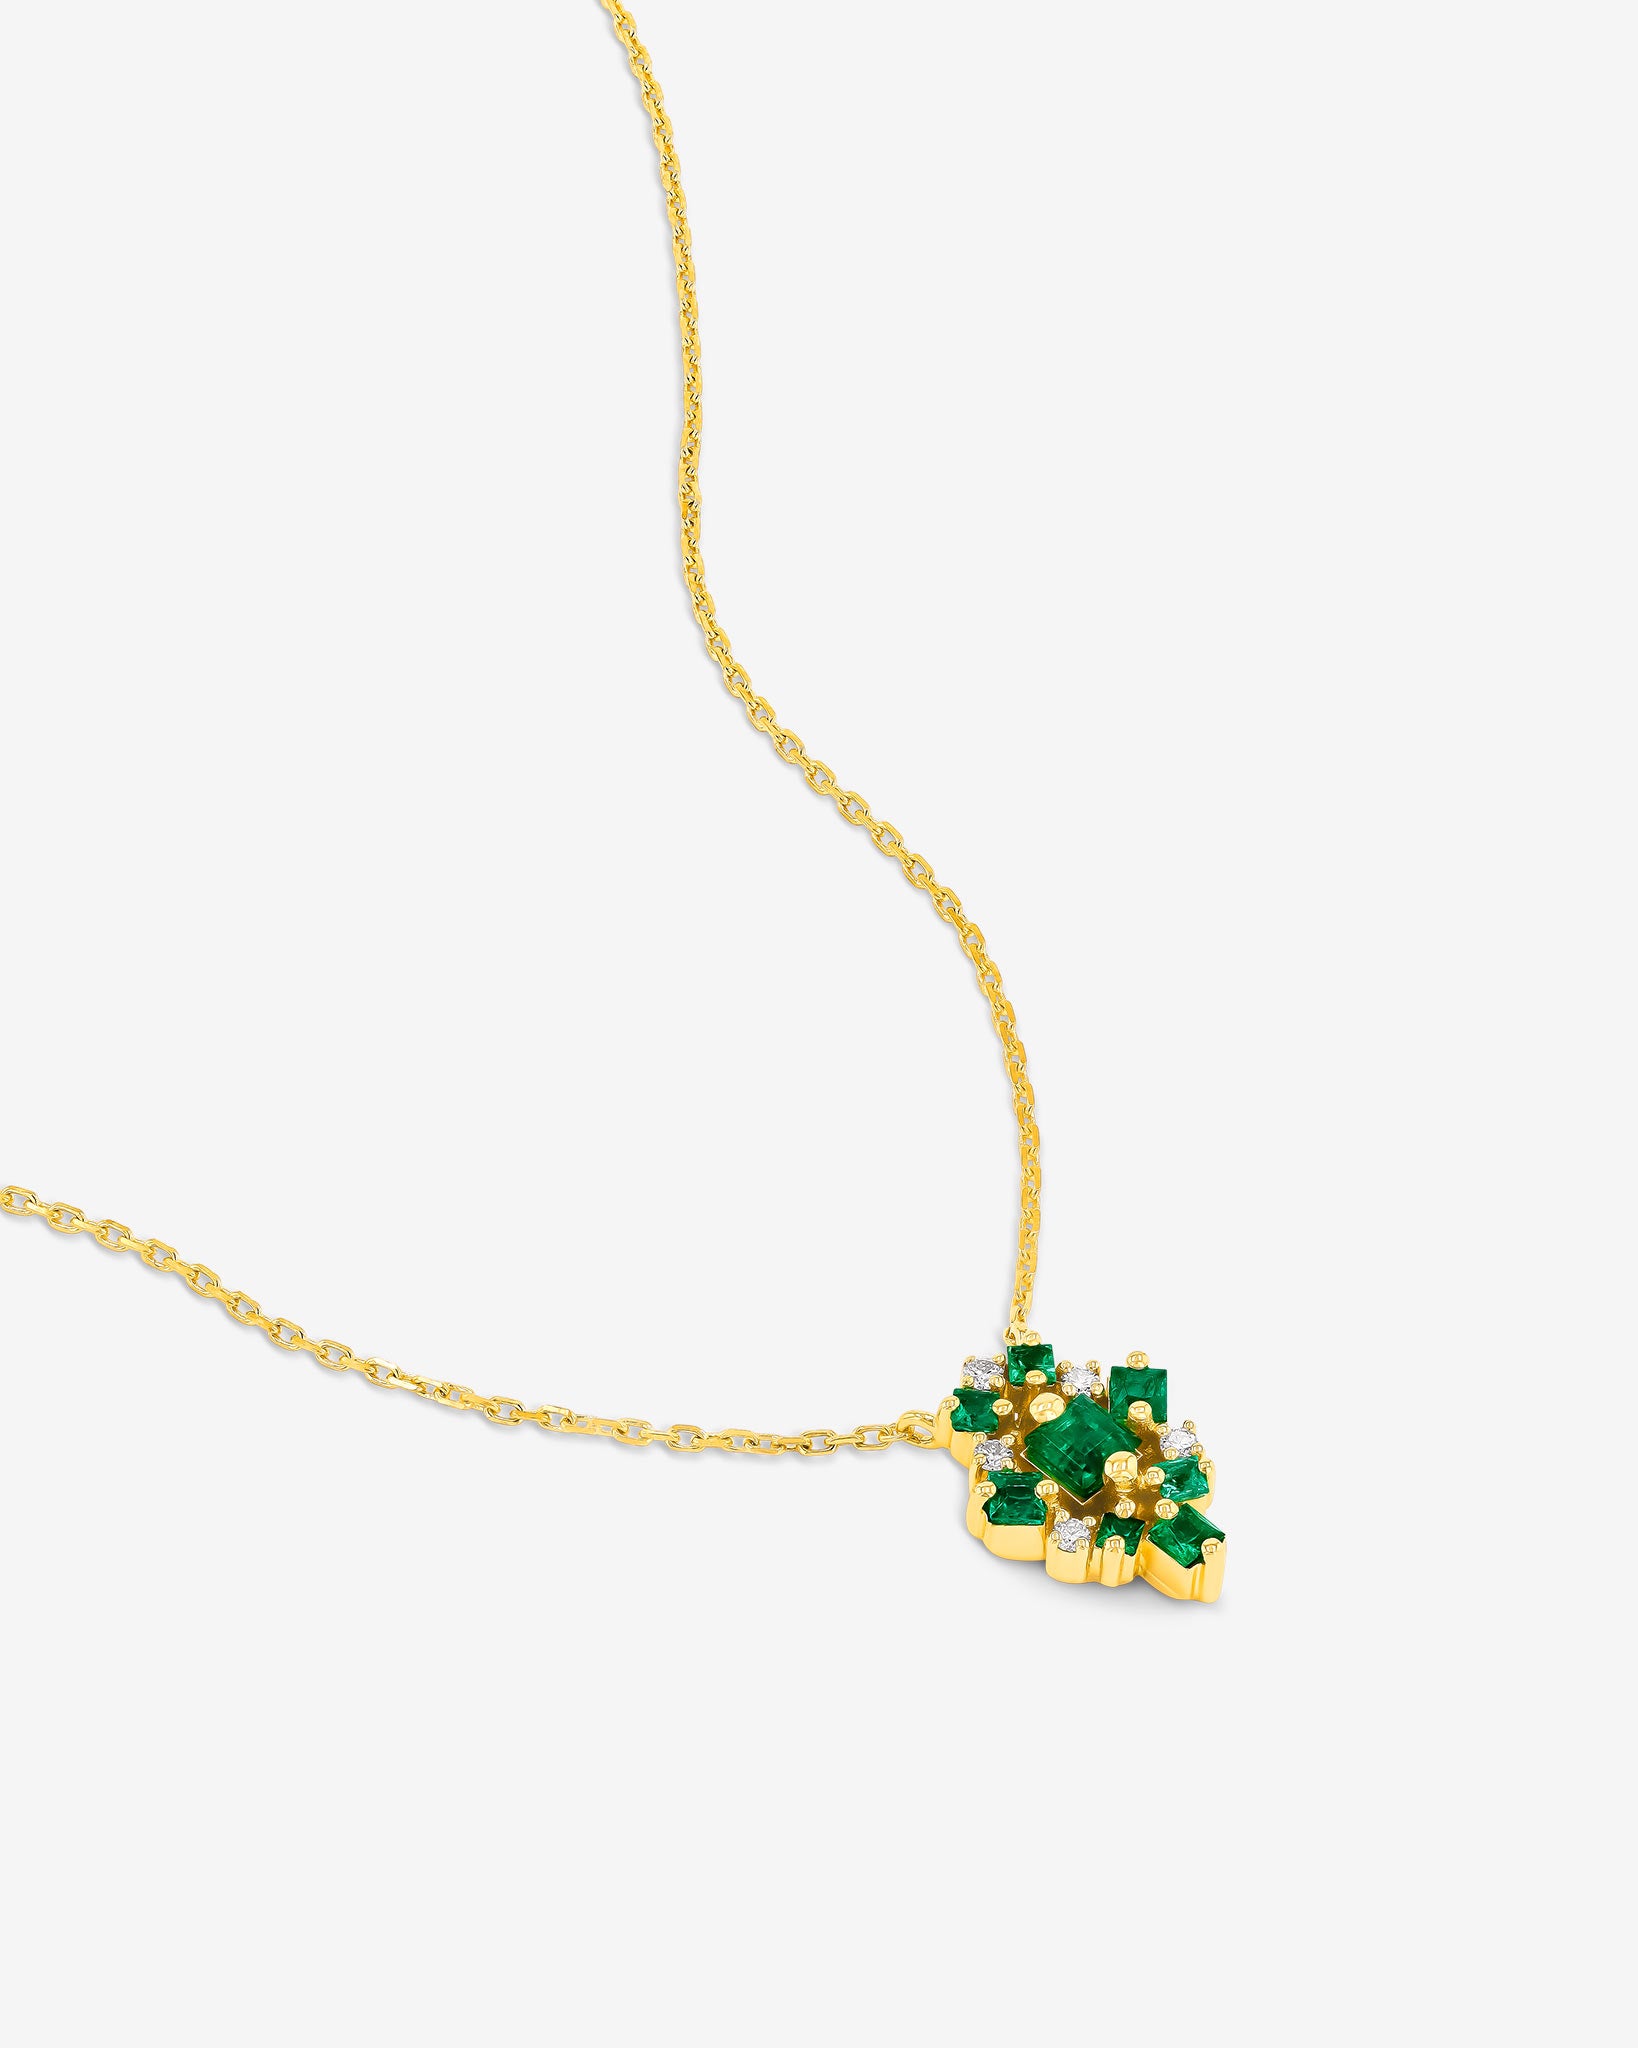 Suzanne Kalan La Fantaisie Star Emerald Pendant in 18k yellow gold